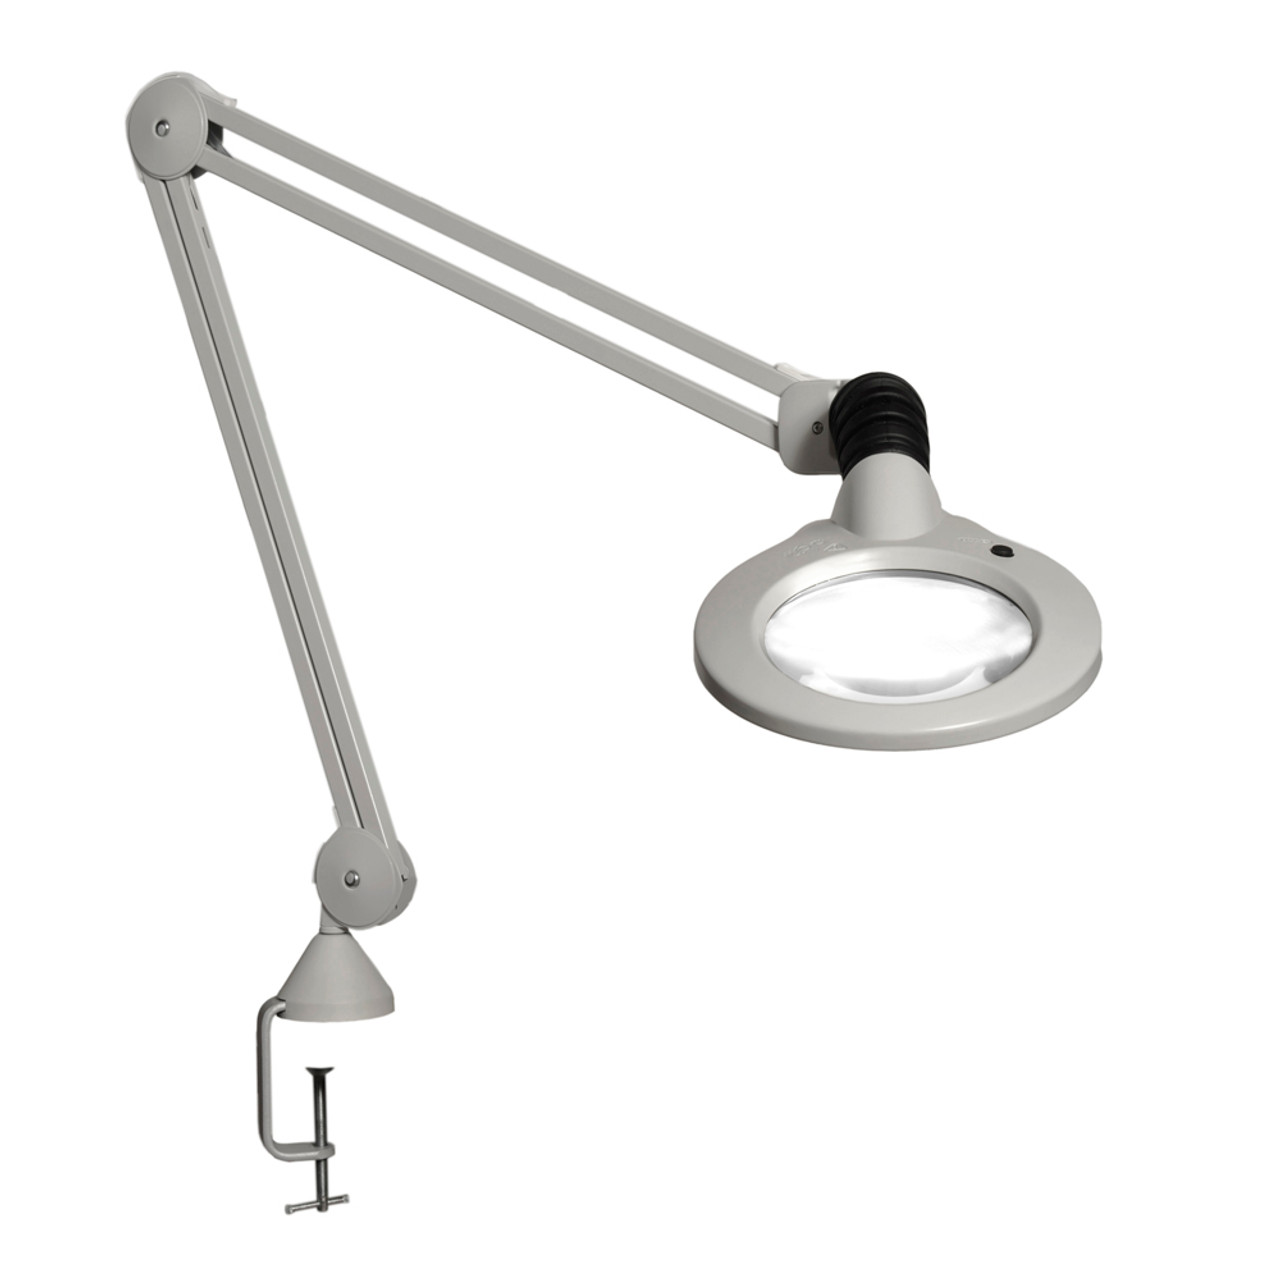 LED Magnifying Lamp